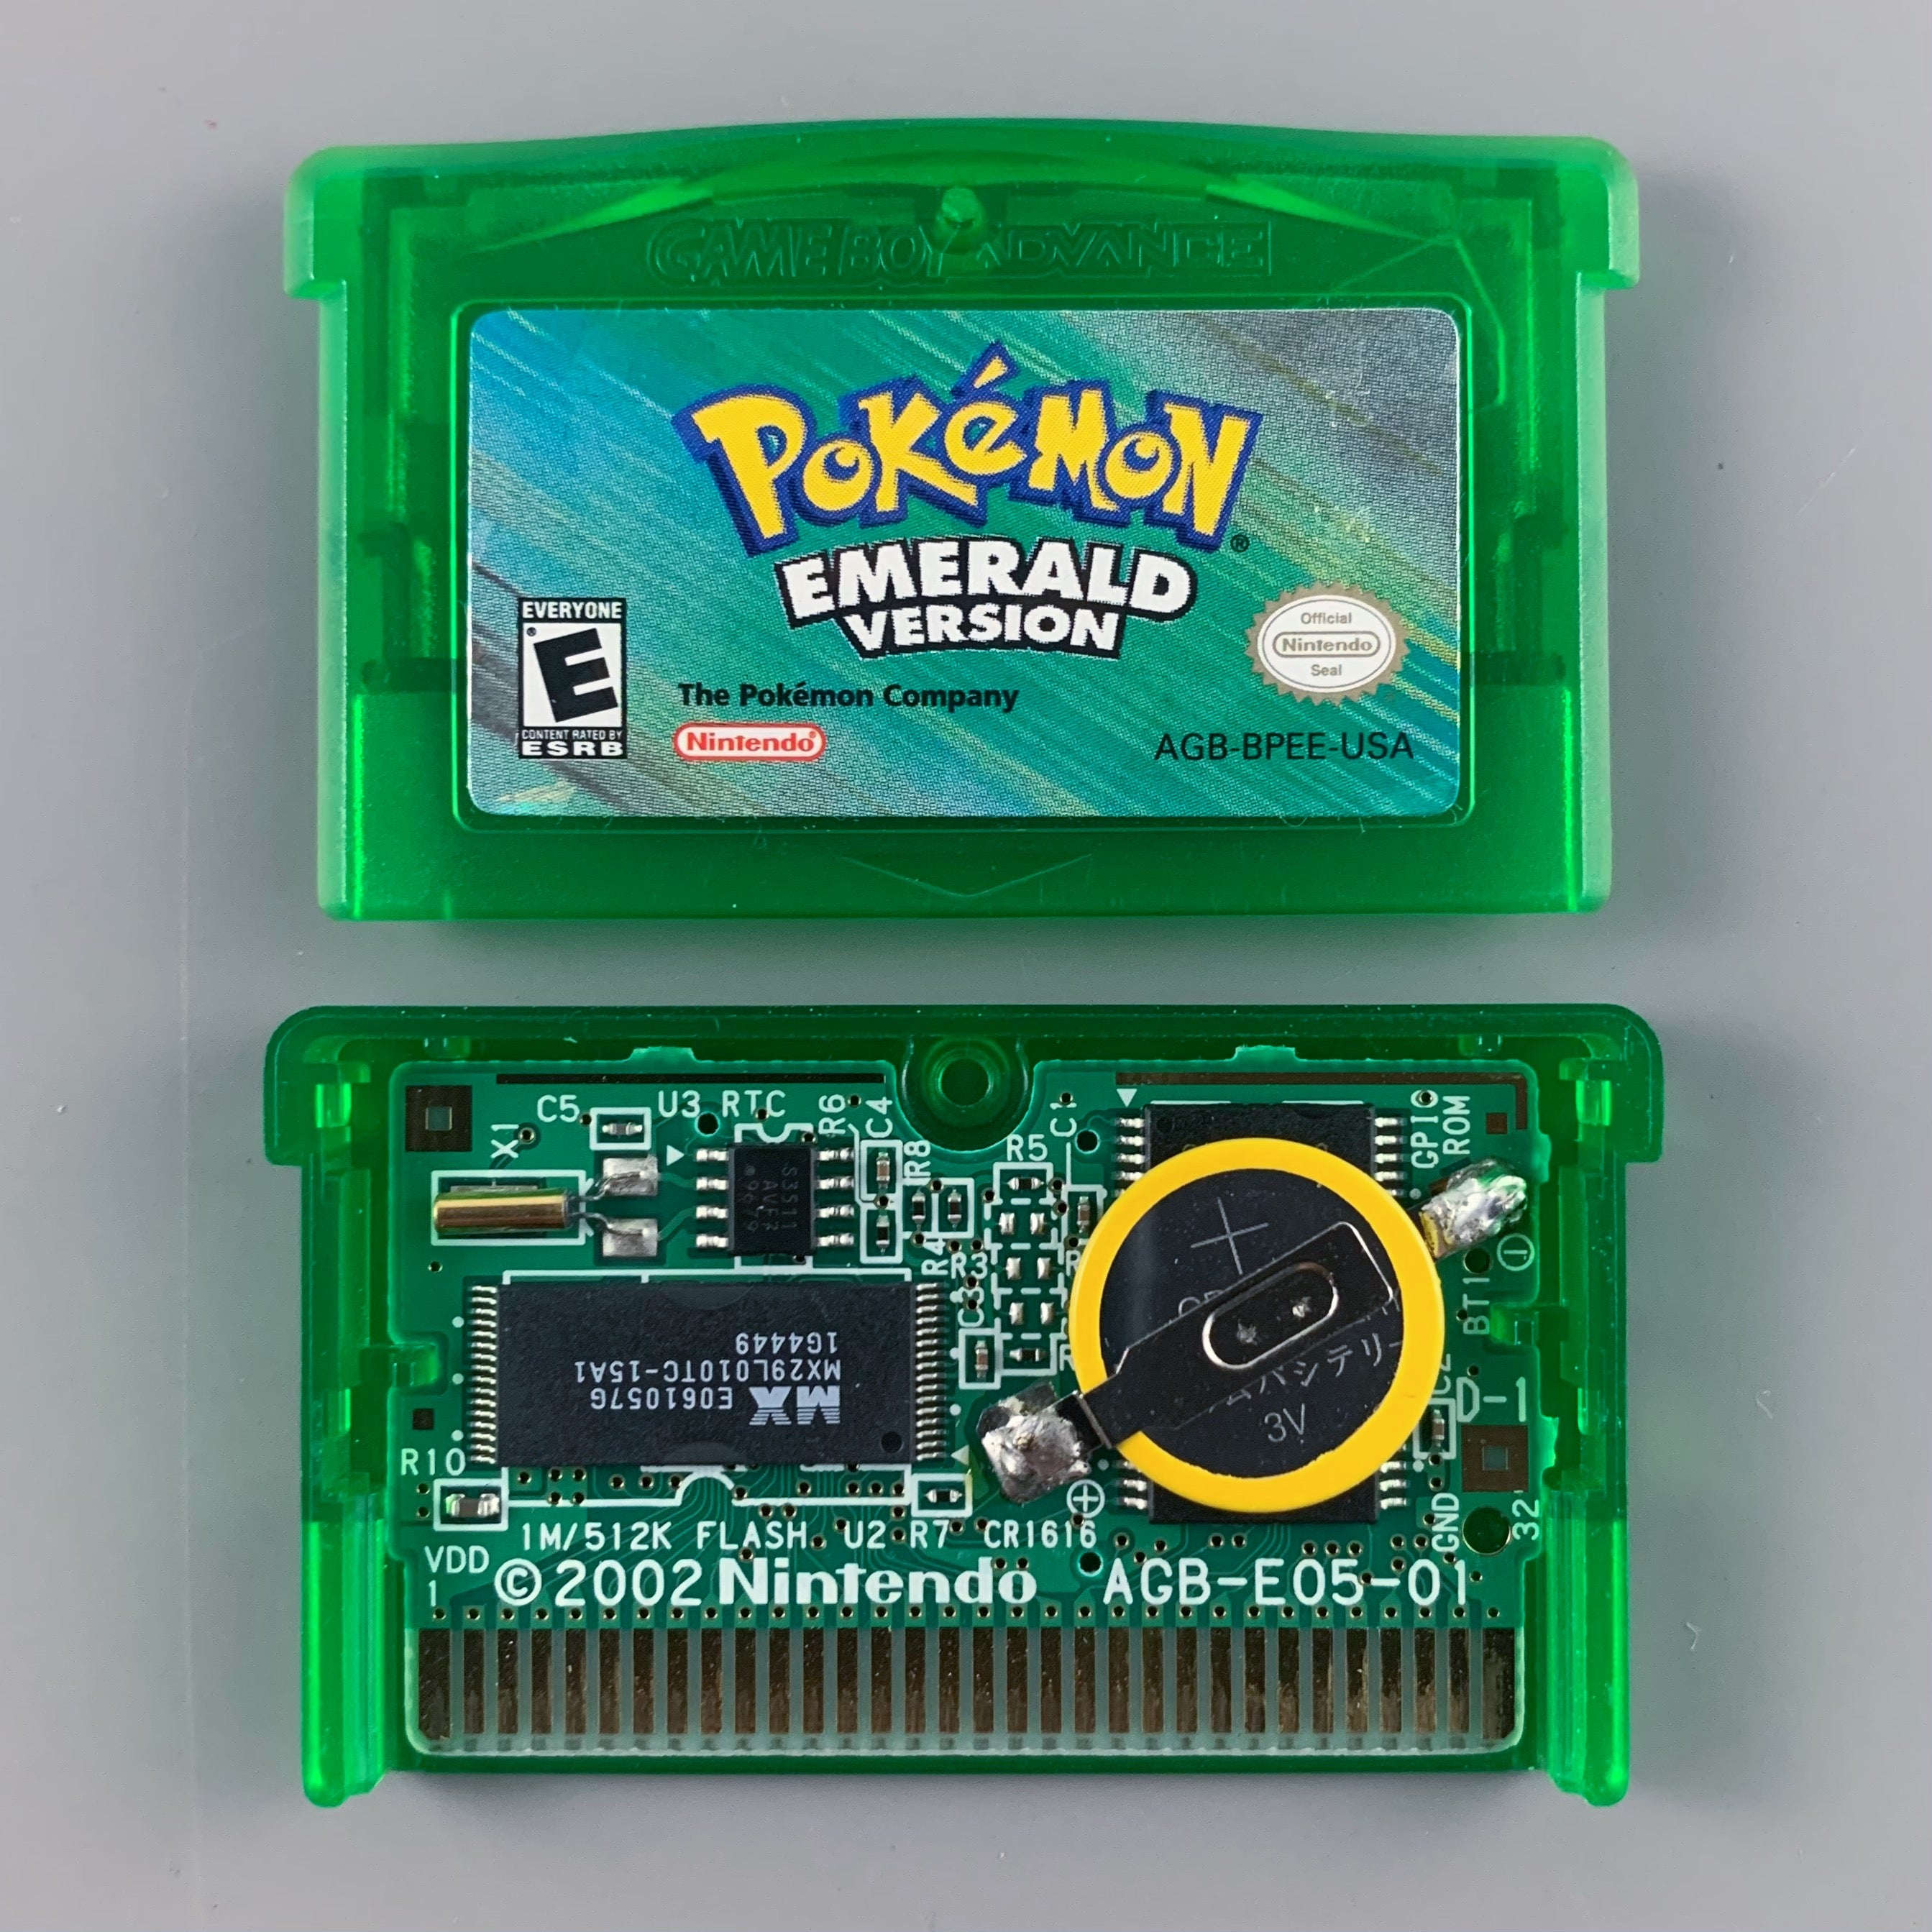 Pokemon Emerald Version Nintendo Game Boy Advance. GBA Cart With